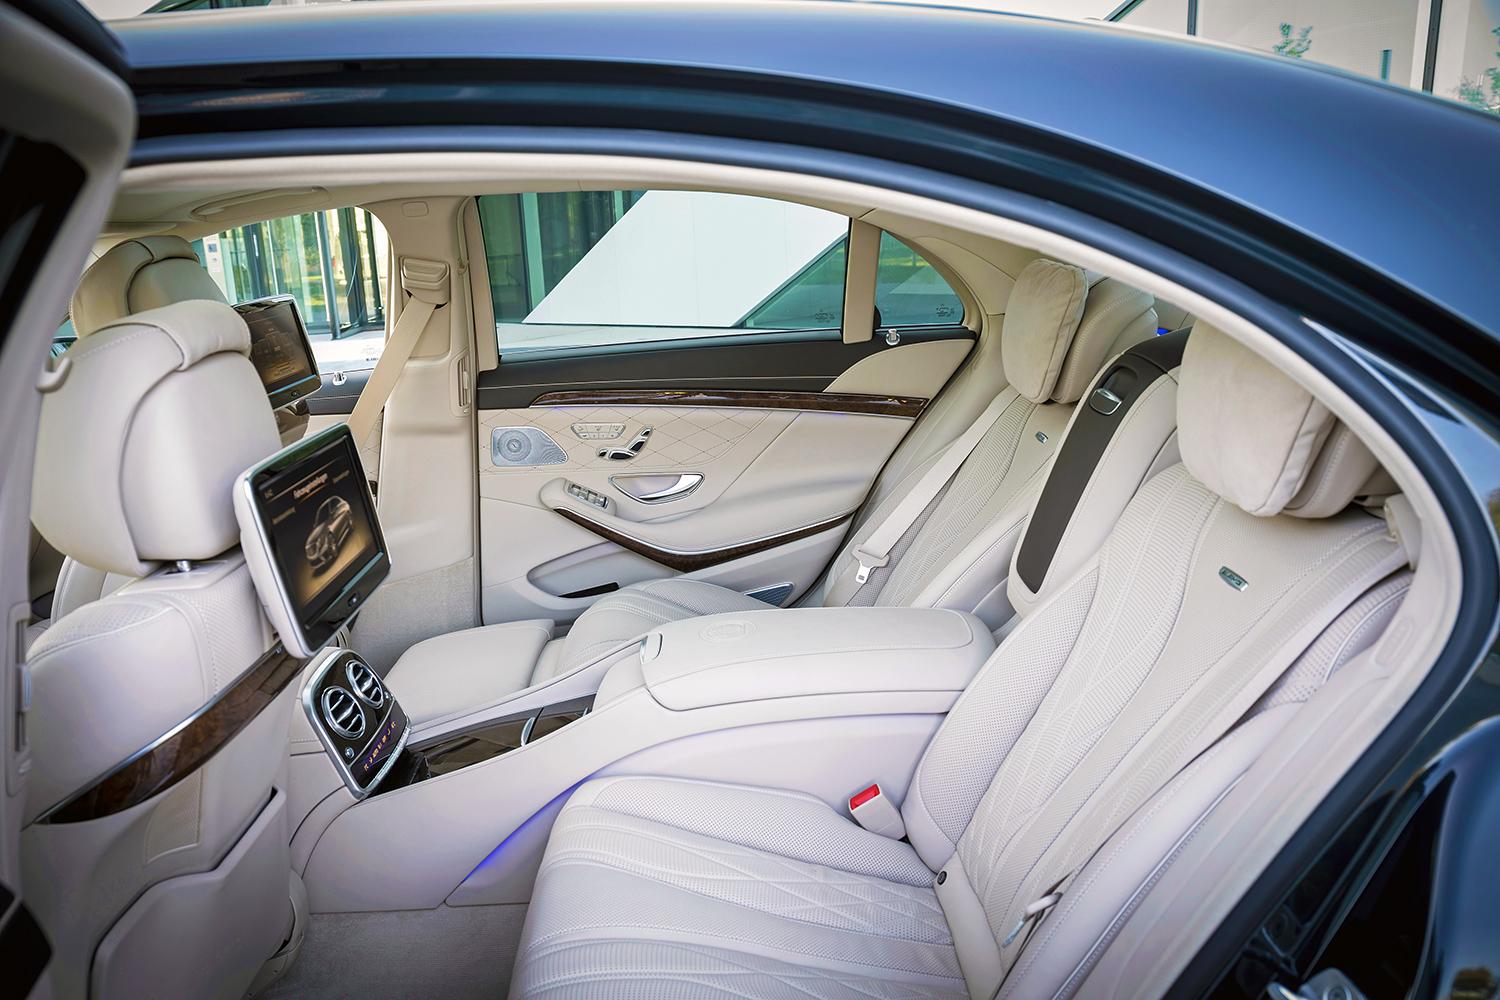 2015 Mercedes_Benz S65 AMG interior back